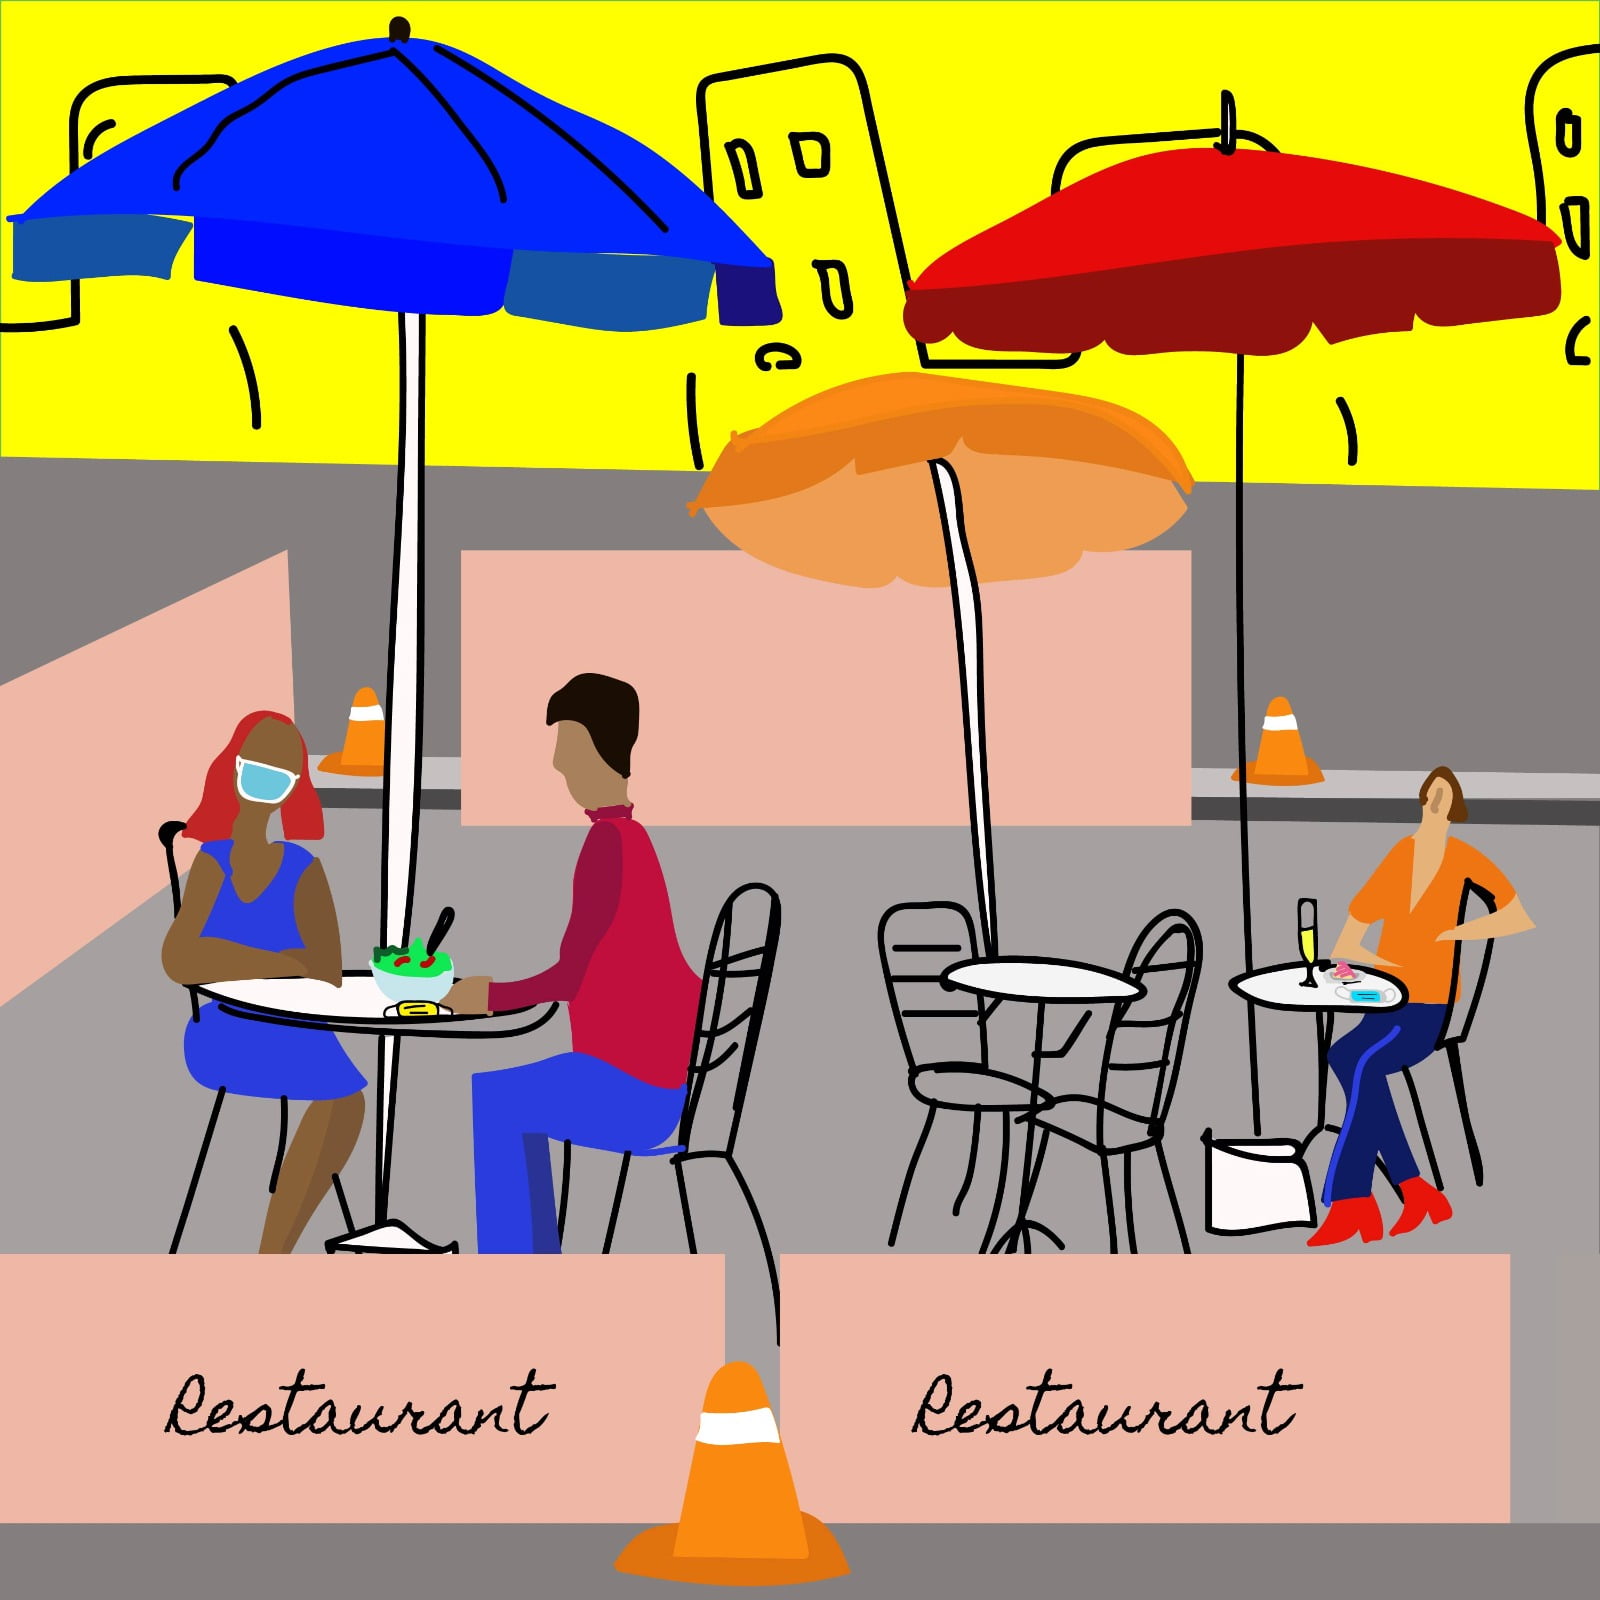 Rita Azar illustration featured in 360 MAGAZINE for LA restaurant article.